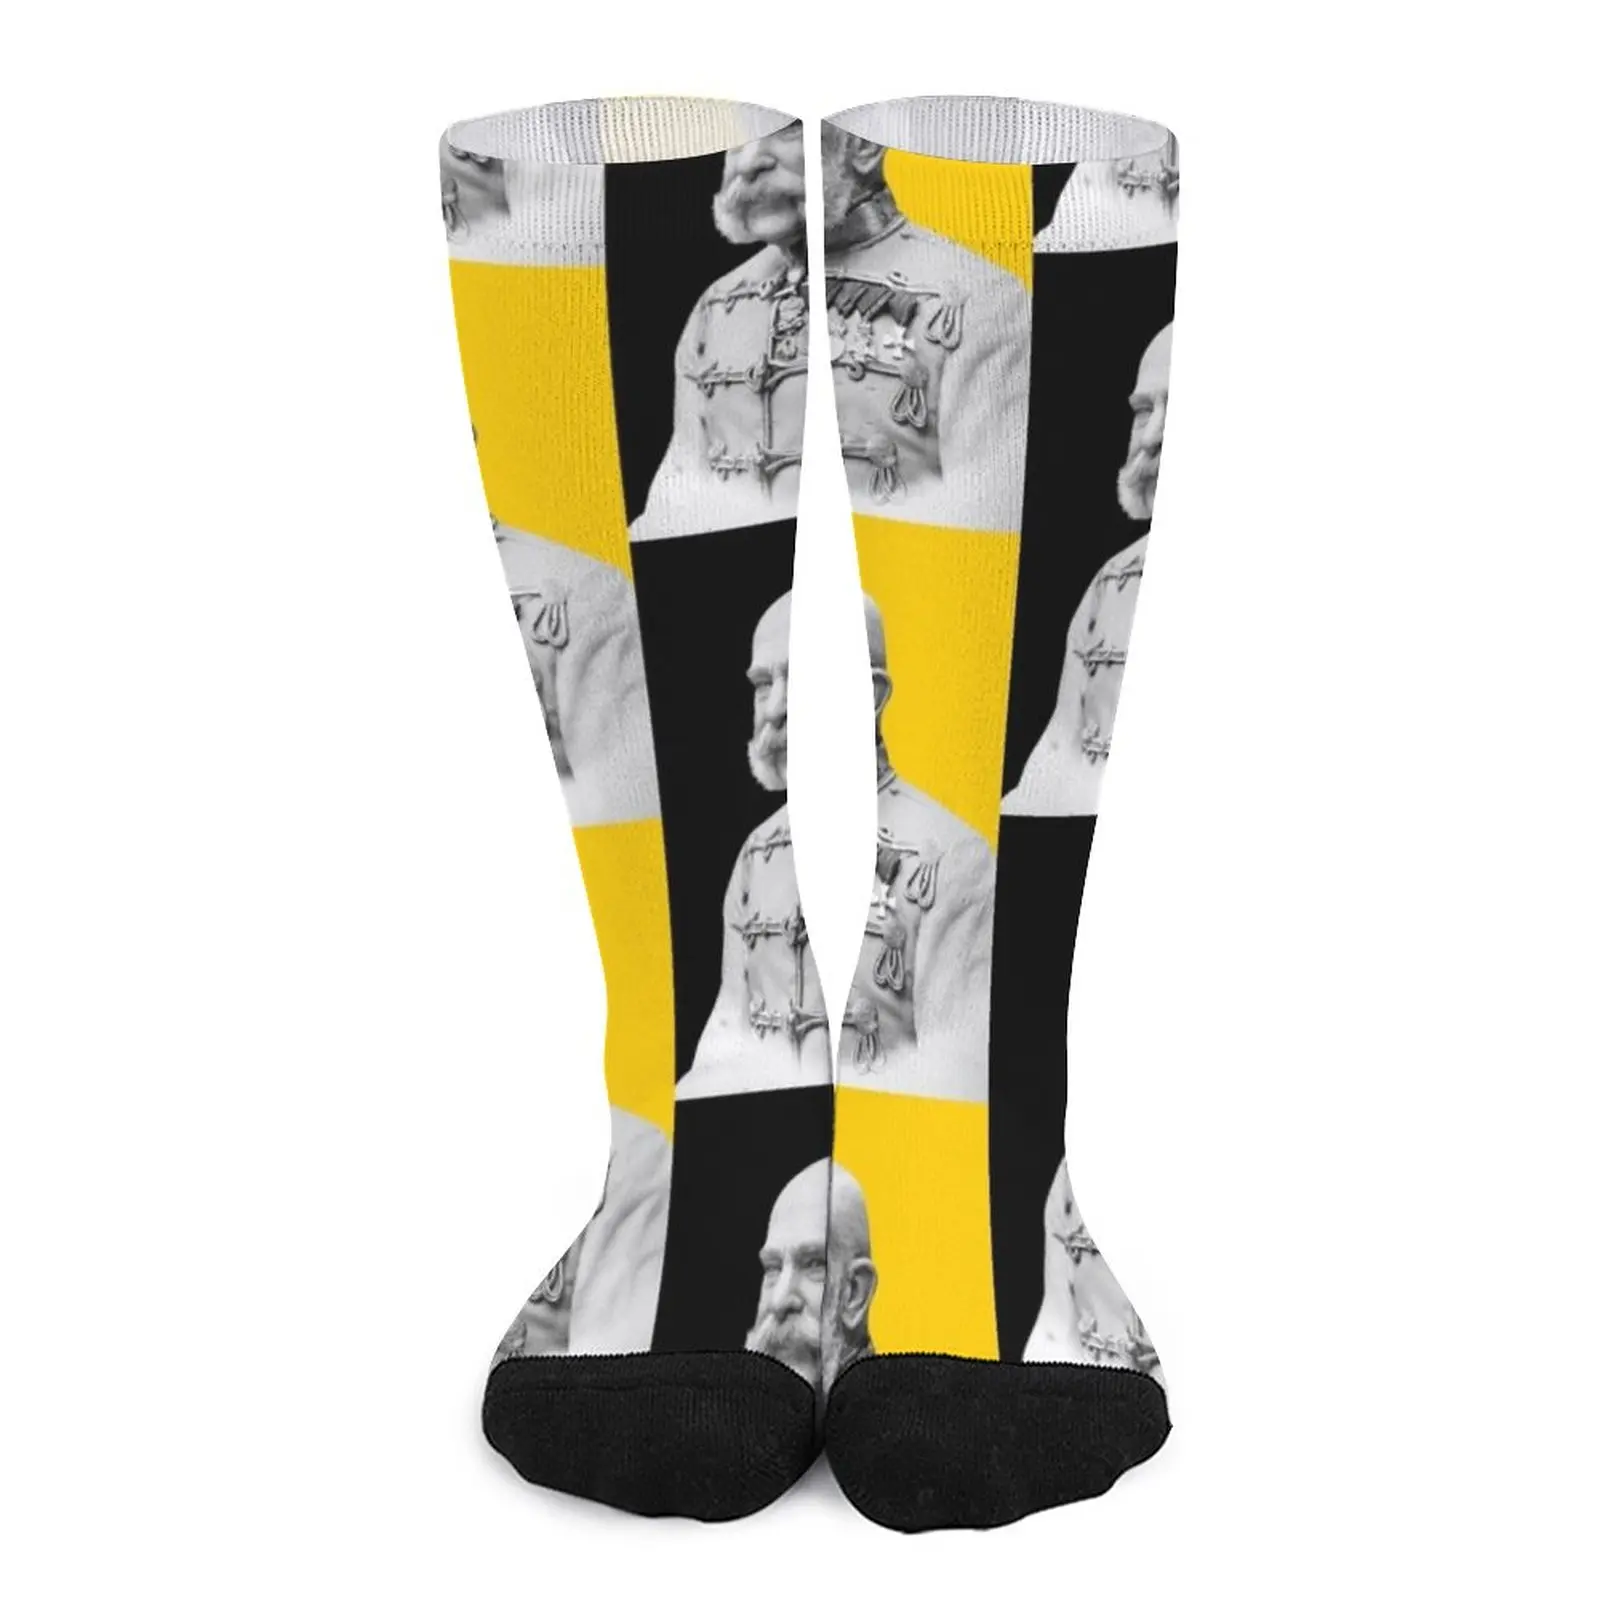 Franz Joseph I of Austria with Flag Socks Crossfit socks heated socks